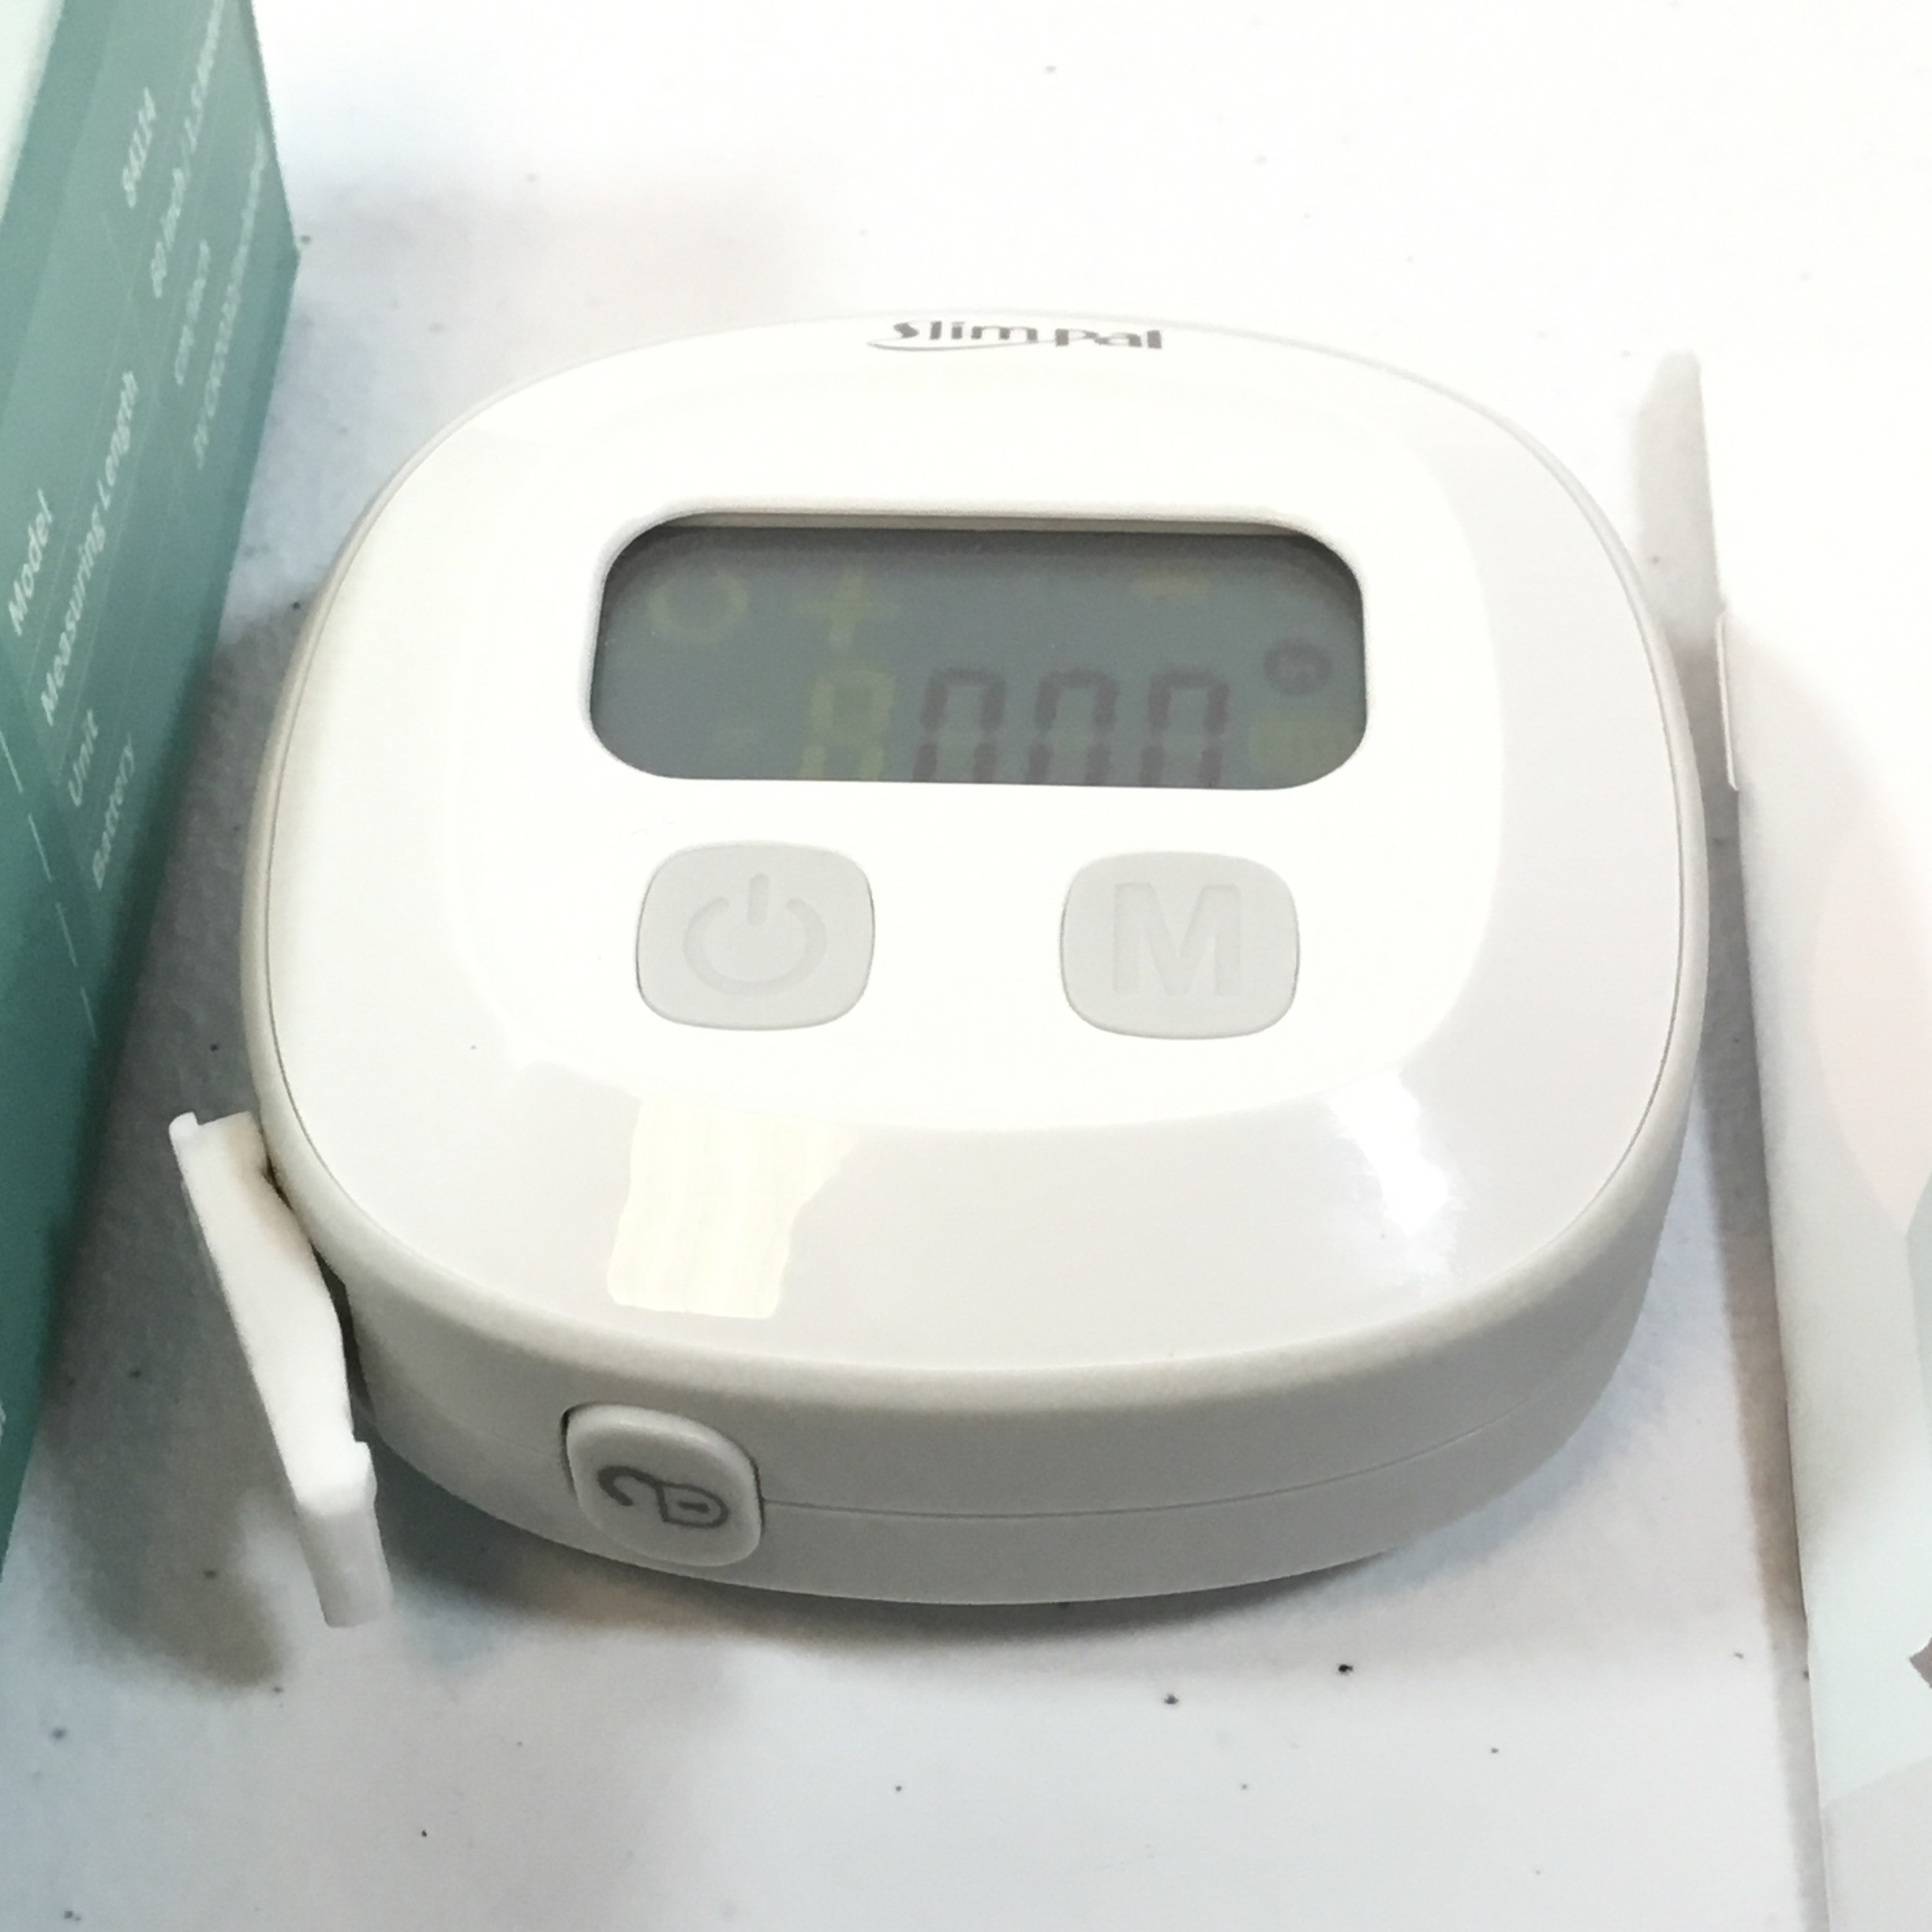 Slimpal smart tape measure lite, Model:84114, Open Box